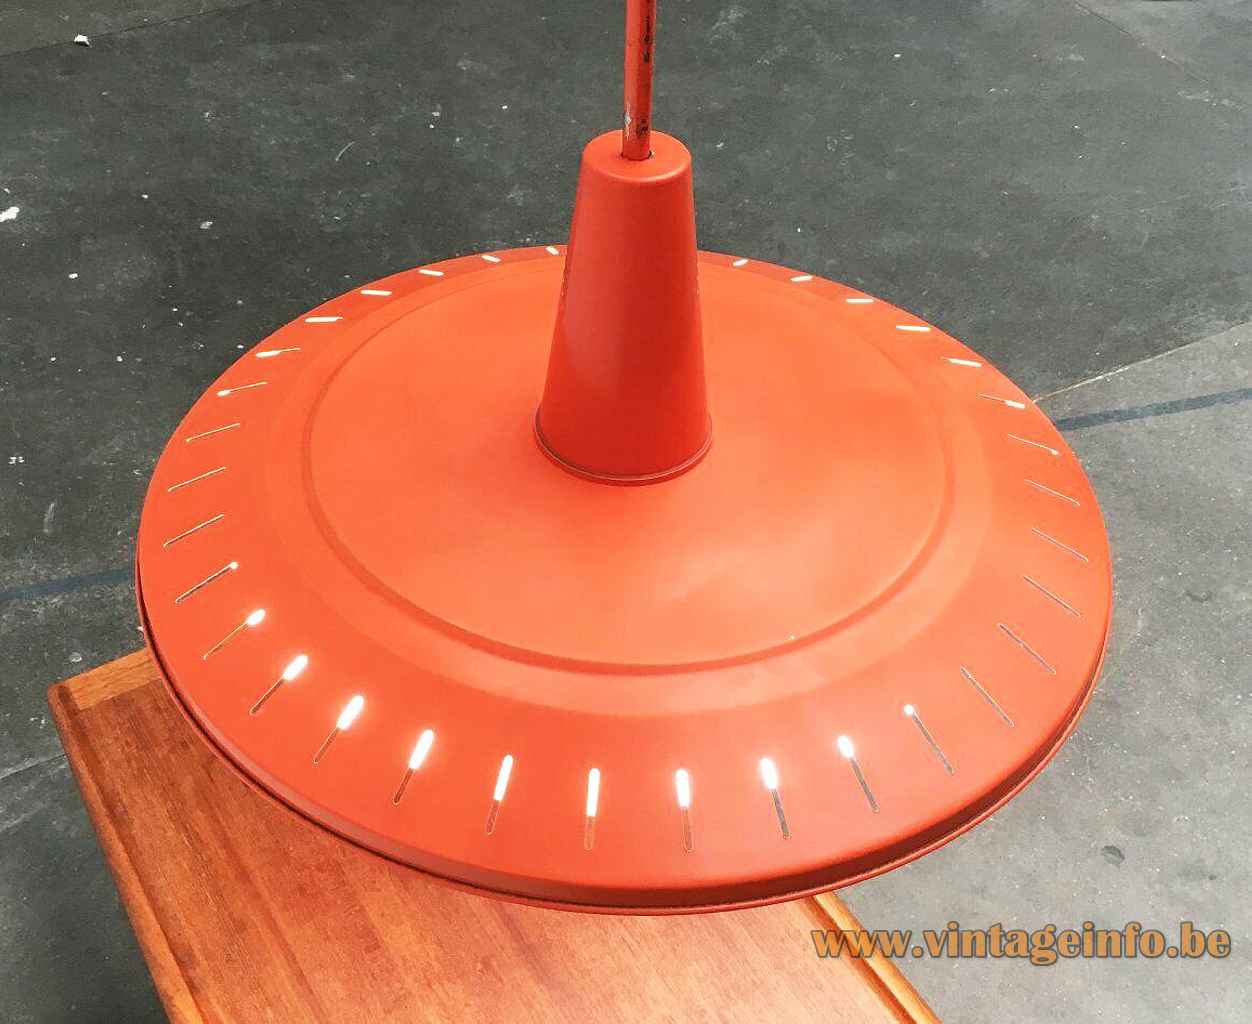 Van Haute orange pendant lamp round metal disc lampshade elongated slots circular fluorescent tube 1960s Belgium